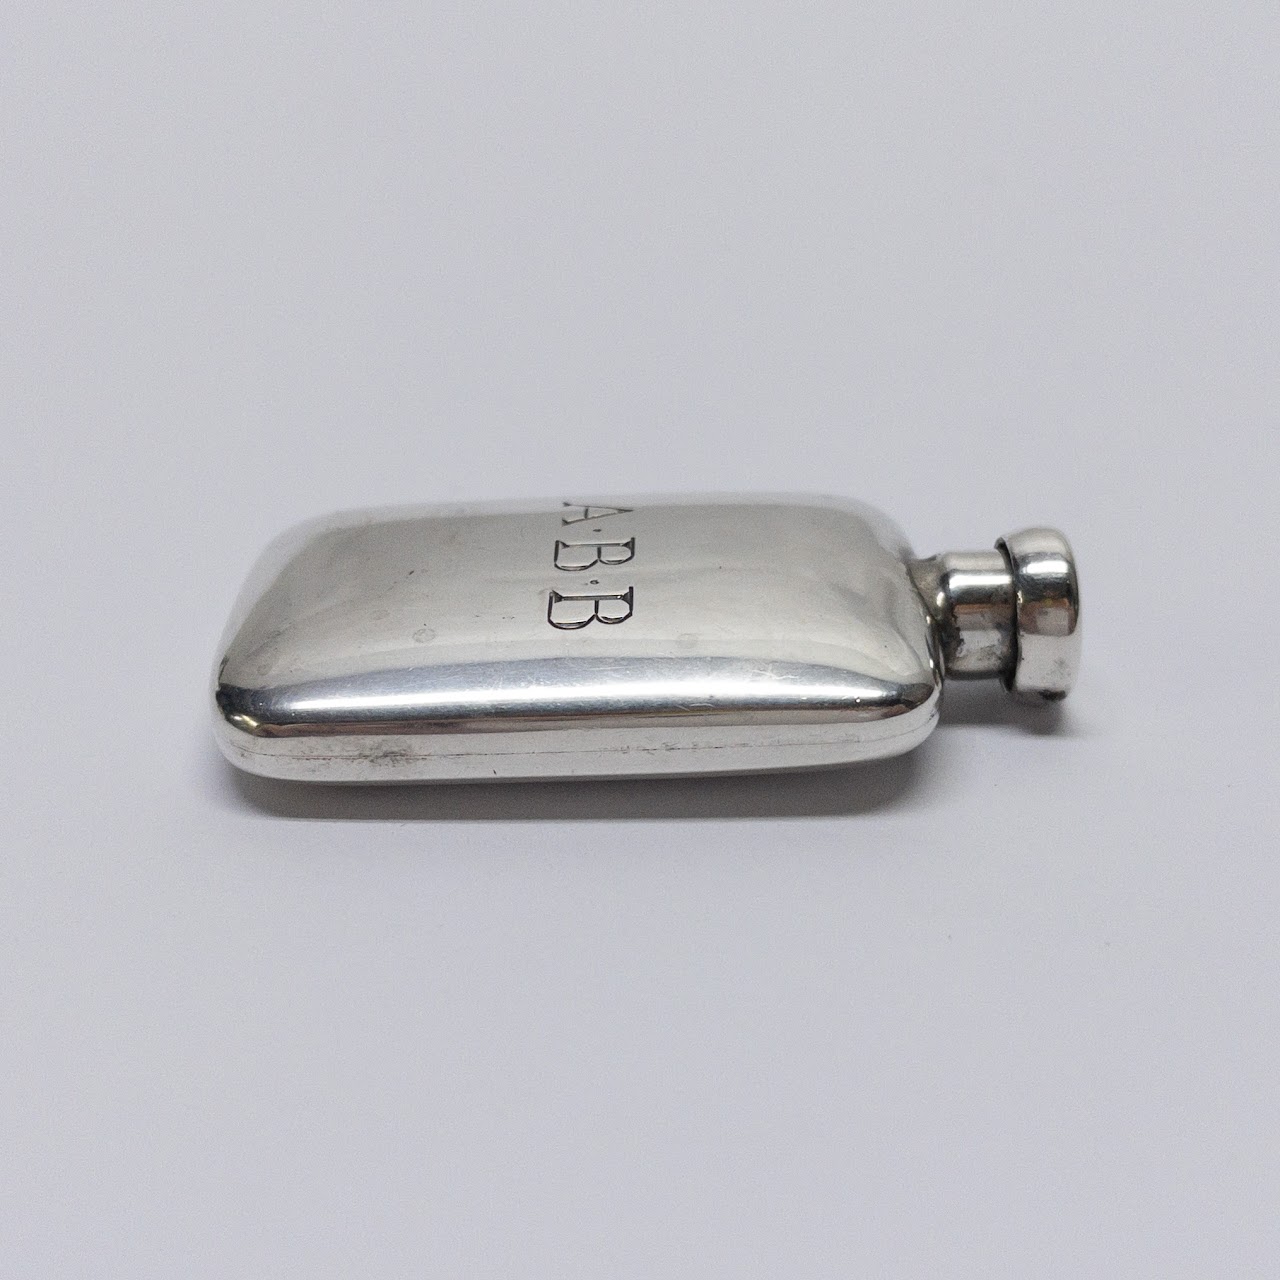 Tiffany & Co. Sterling Silver Perfume Dropper Flask